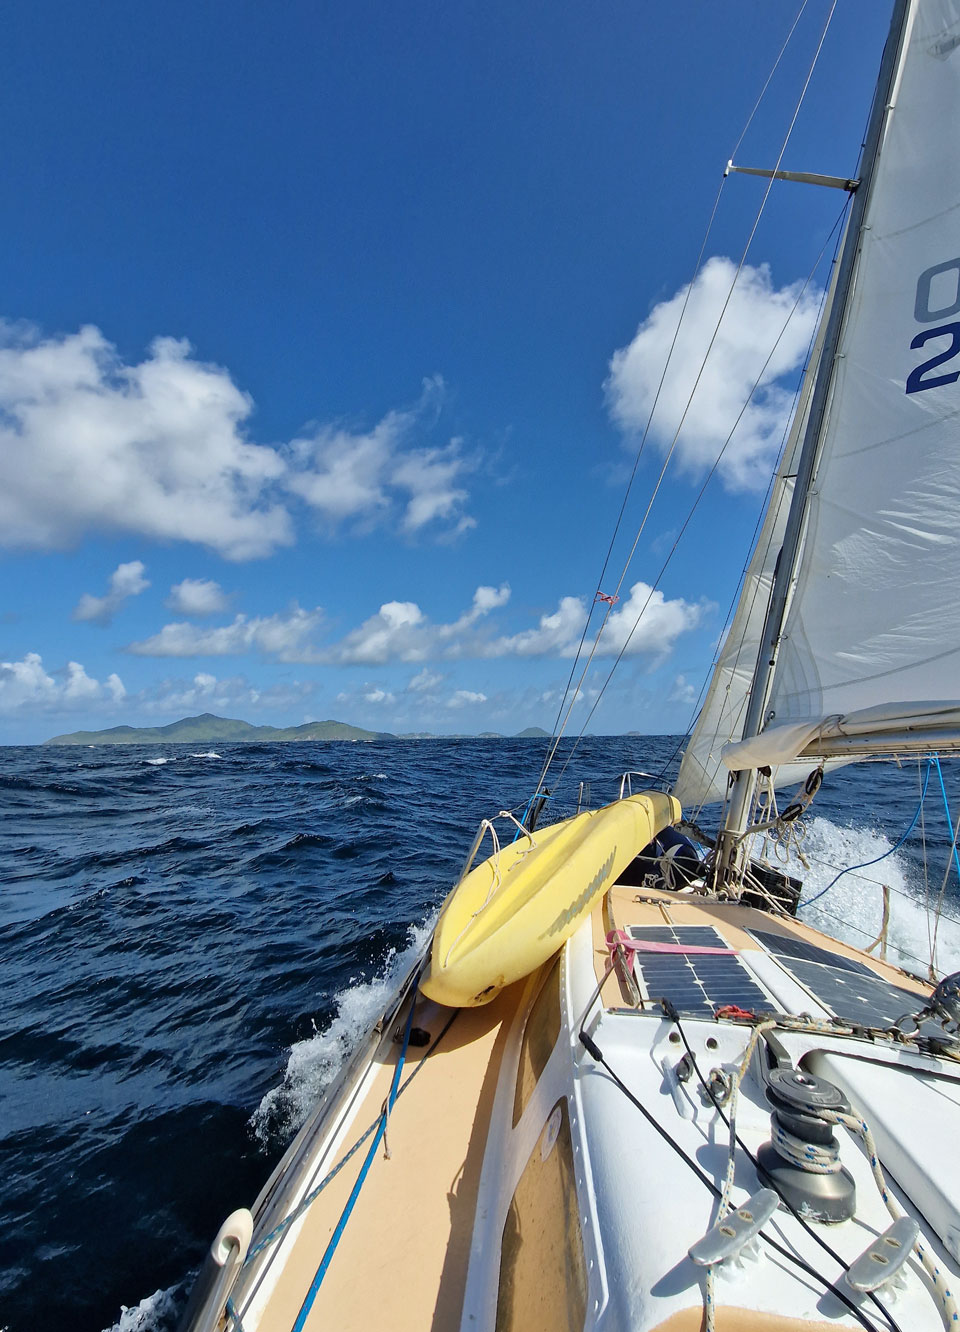 The sailboat 'Calypso' beating to windward